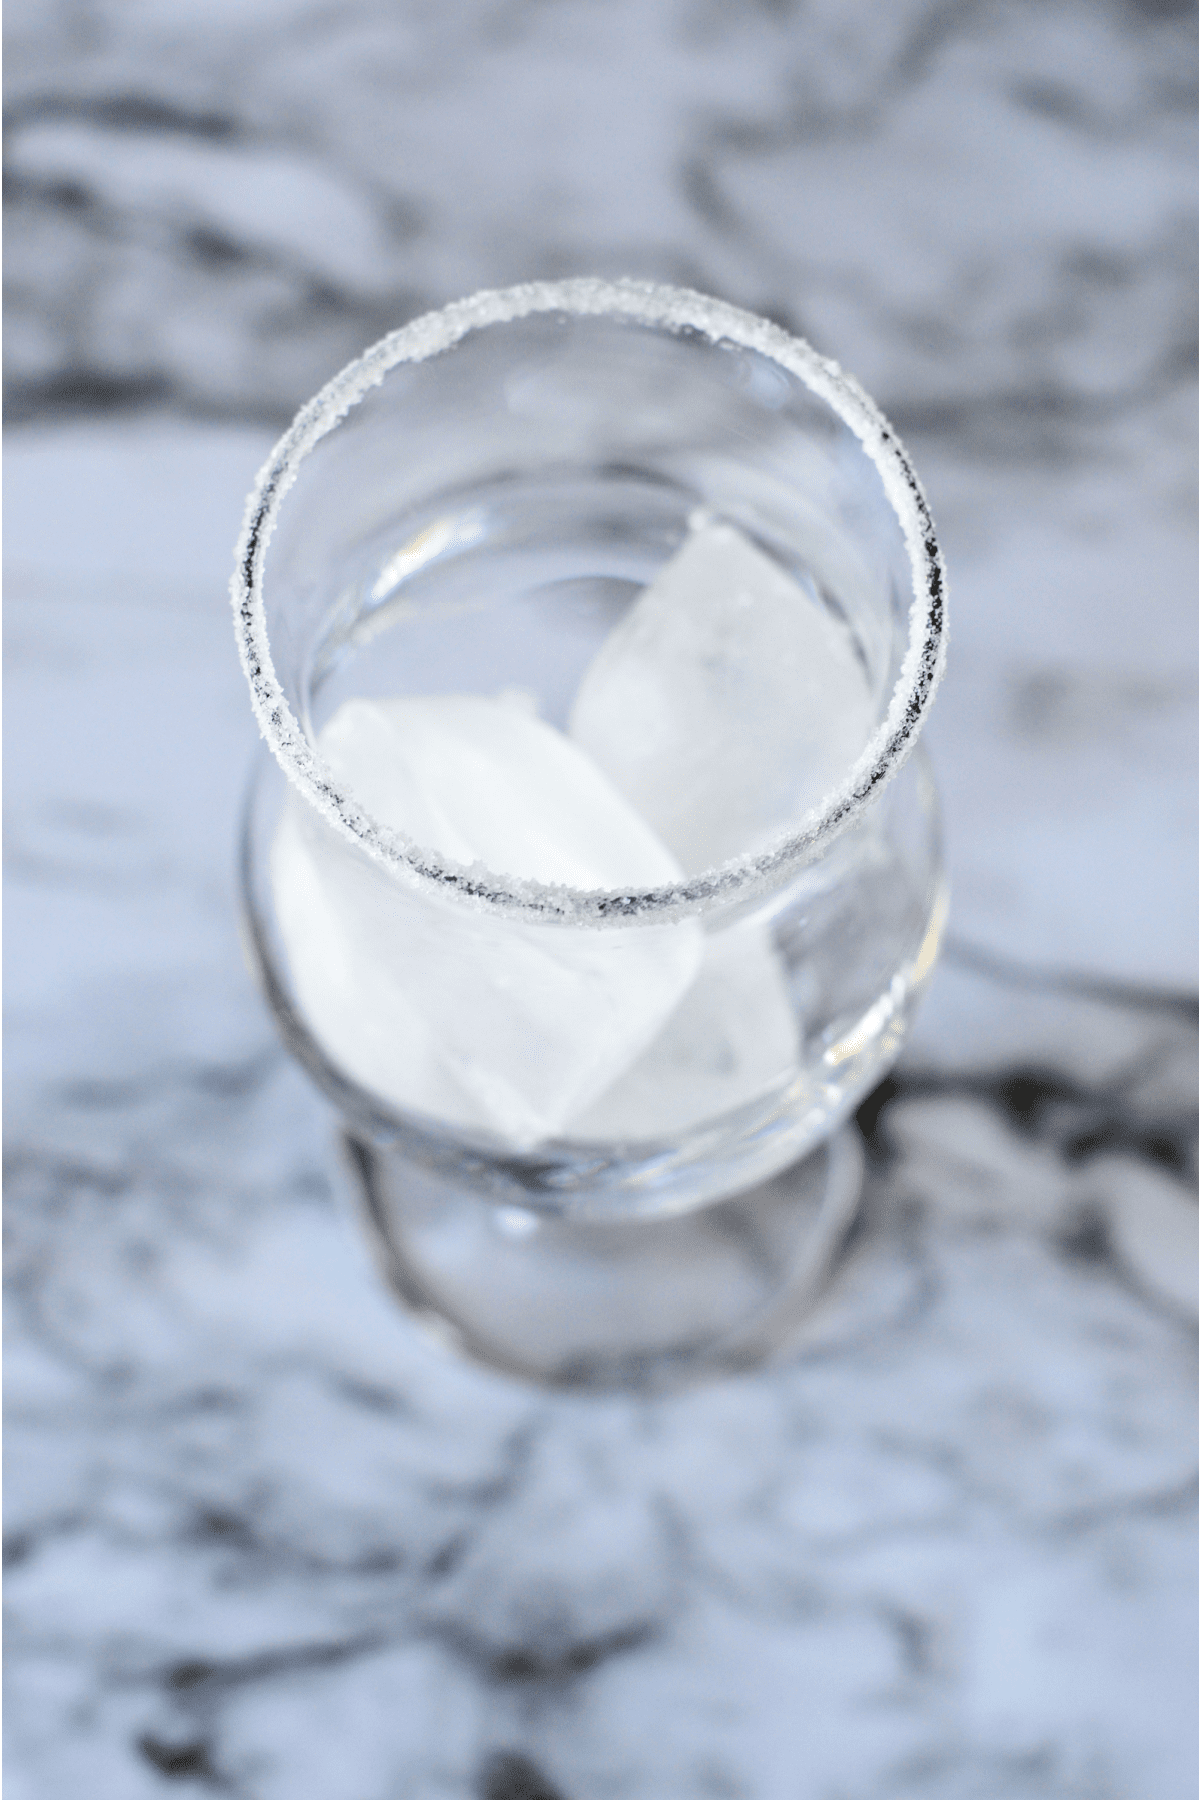 Ice cubes in margarita glass